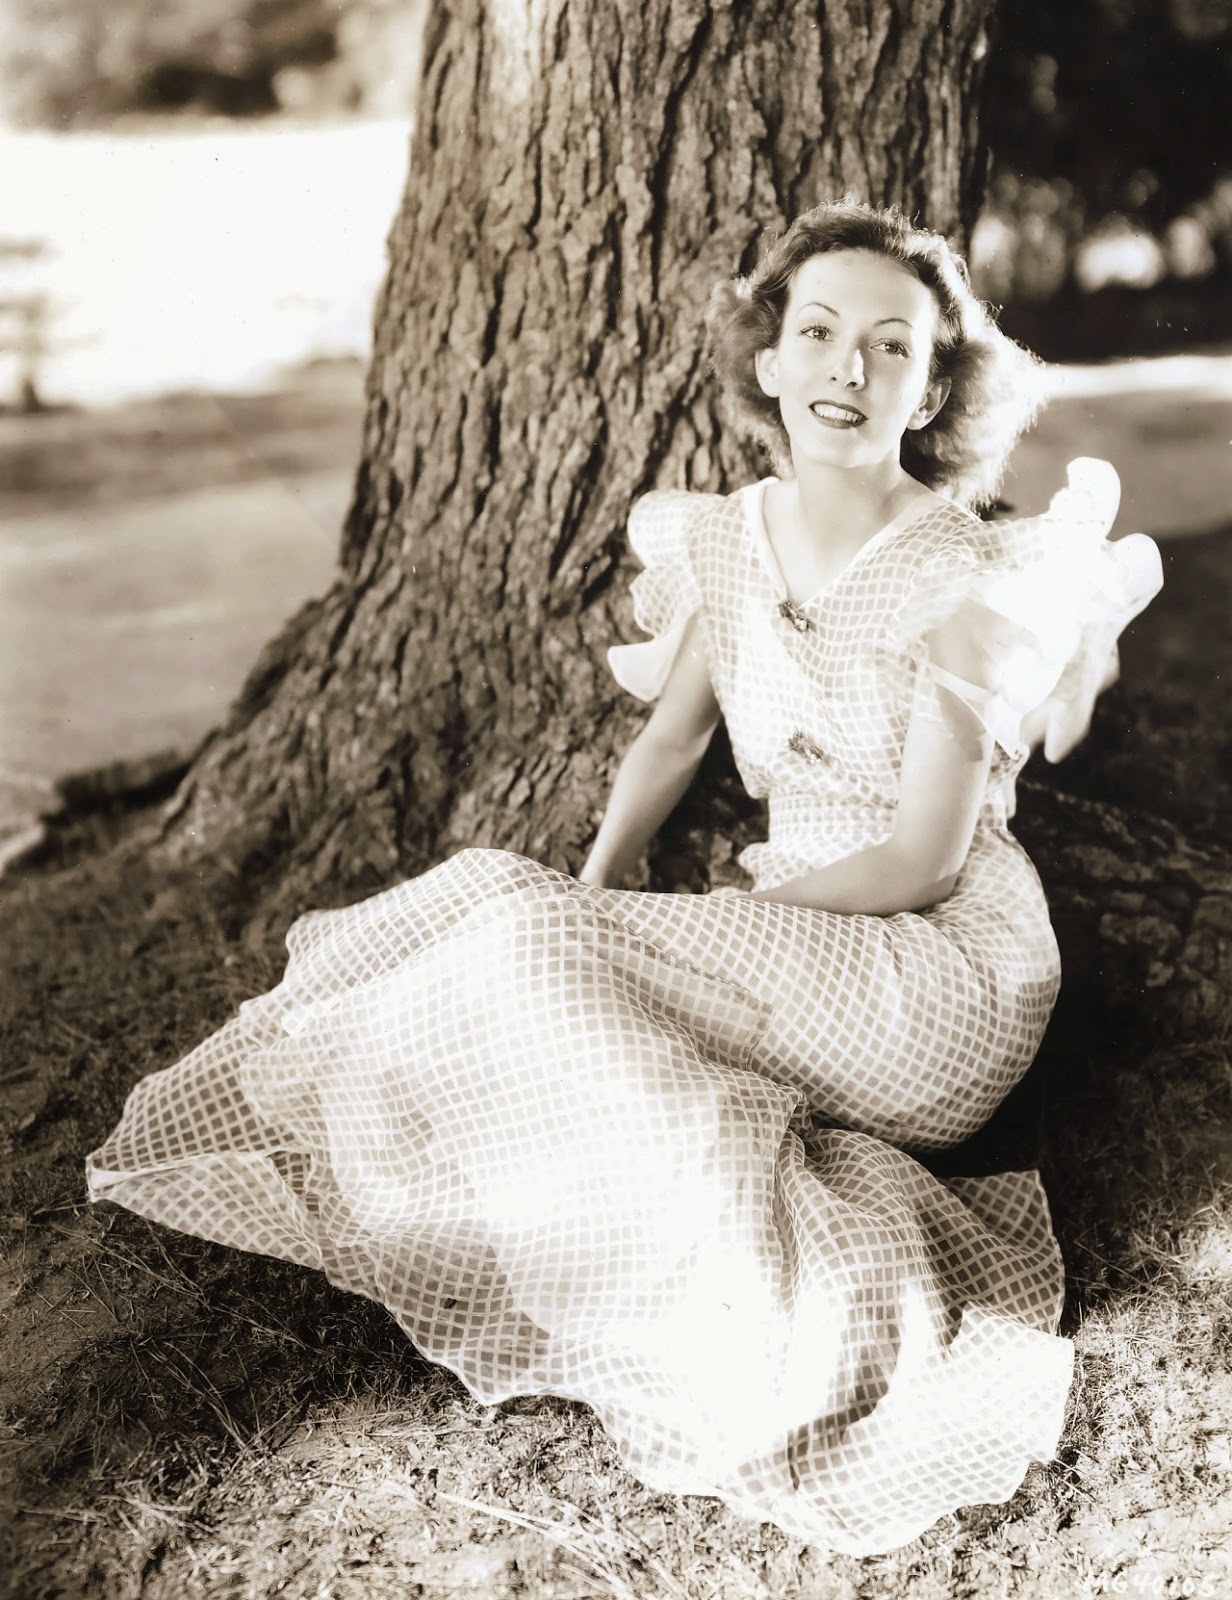 Фотографии 1930 х годов. АМО Ингрэм актриса. 30е годы мода Голливуд. Мода 30-х годов. Актрисы 30-х годов голливудские.